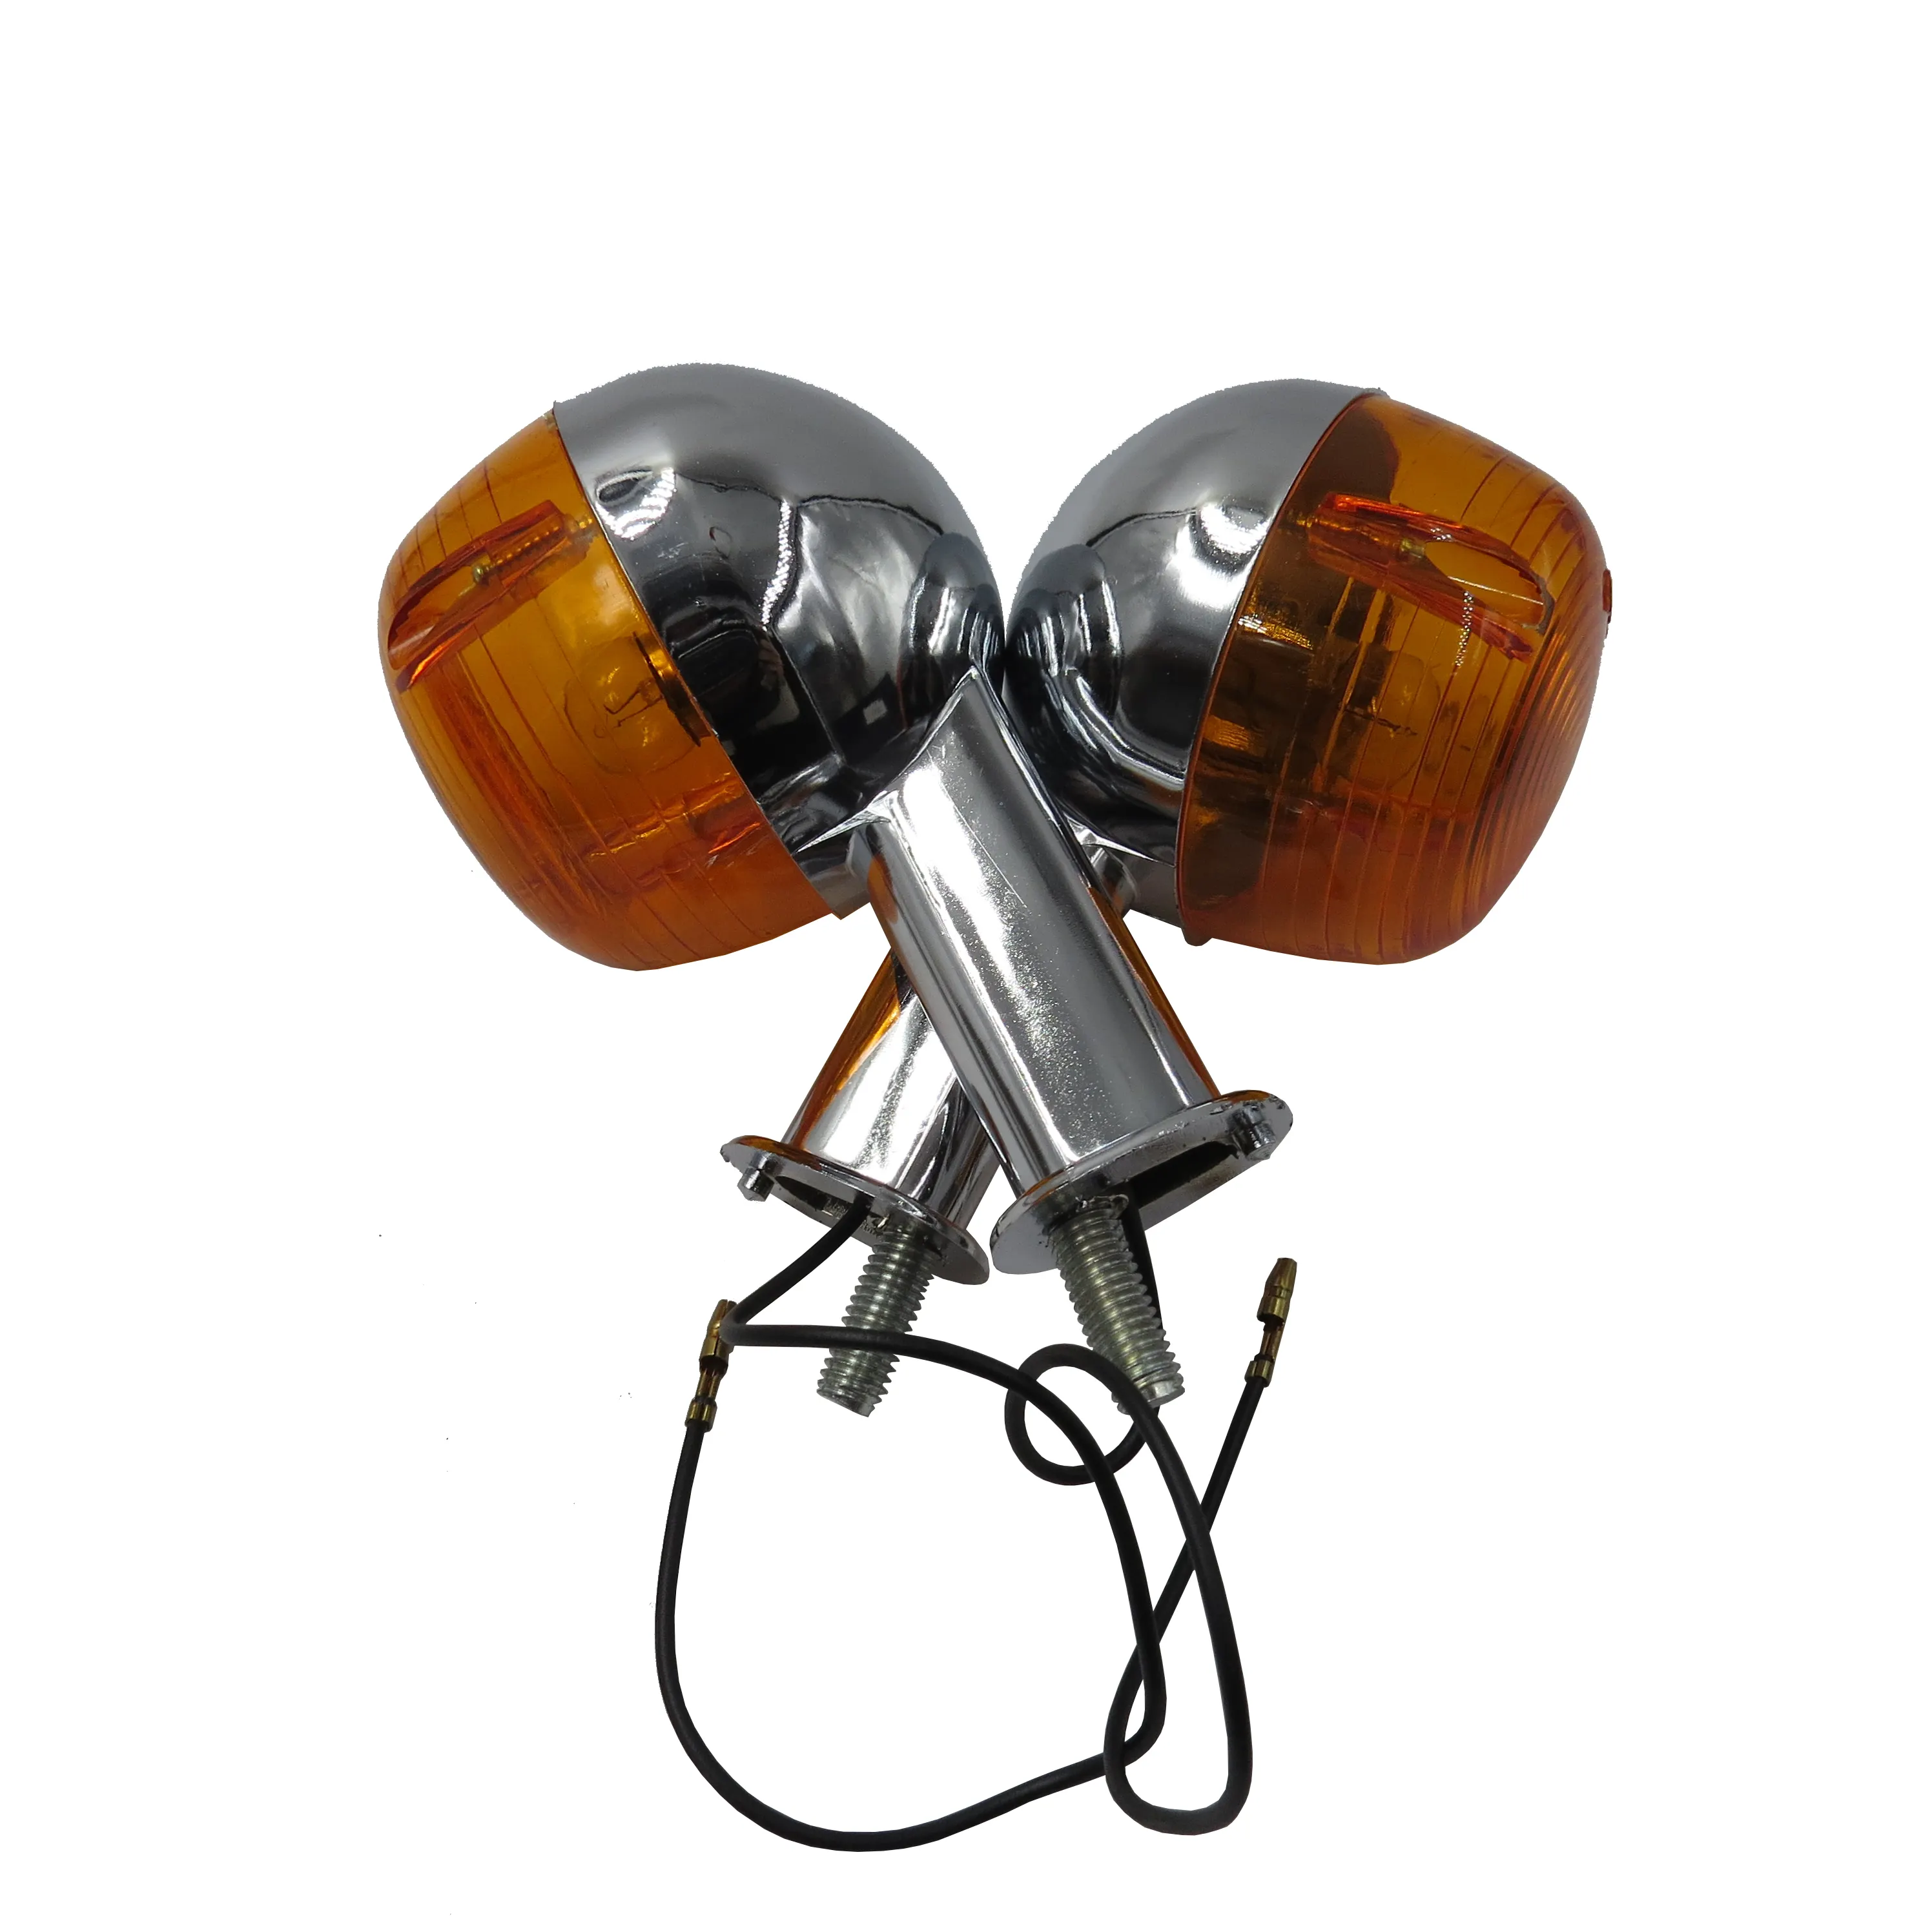 Lampu Winker Pencahayaan Suku Cadang Sepeda Motor, untuk Yamaha Rs100r Rx350 Xs650 Dt250 Dx250 Lb50 Yb100/Rs100 Lb80